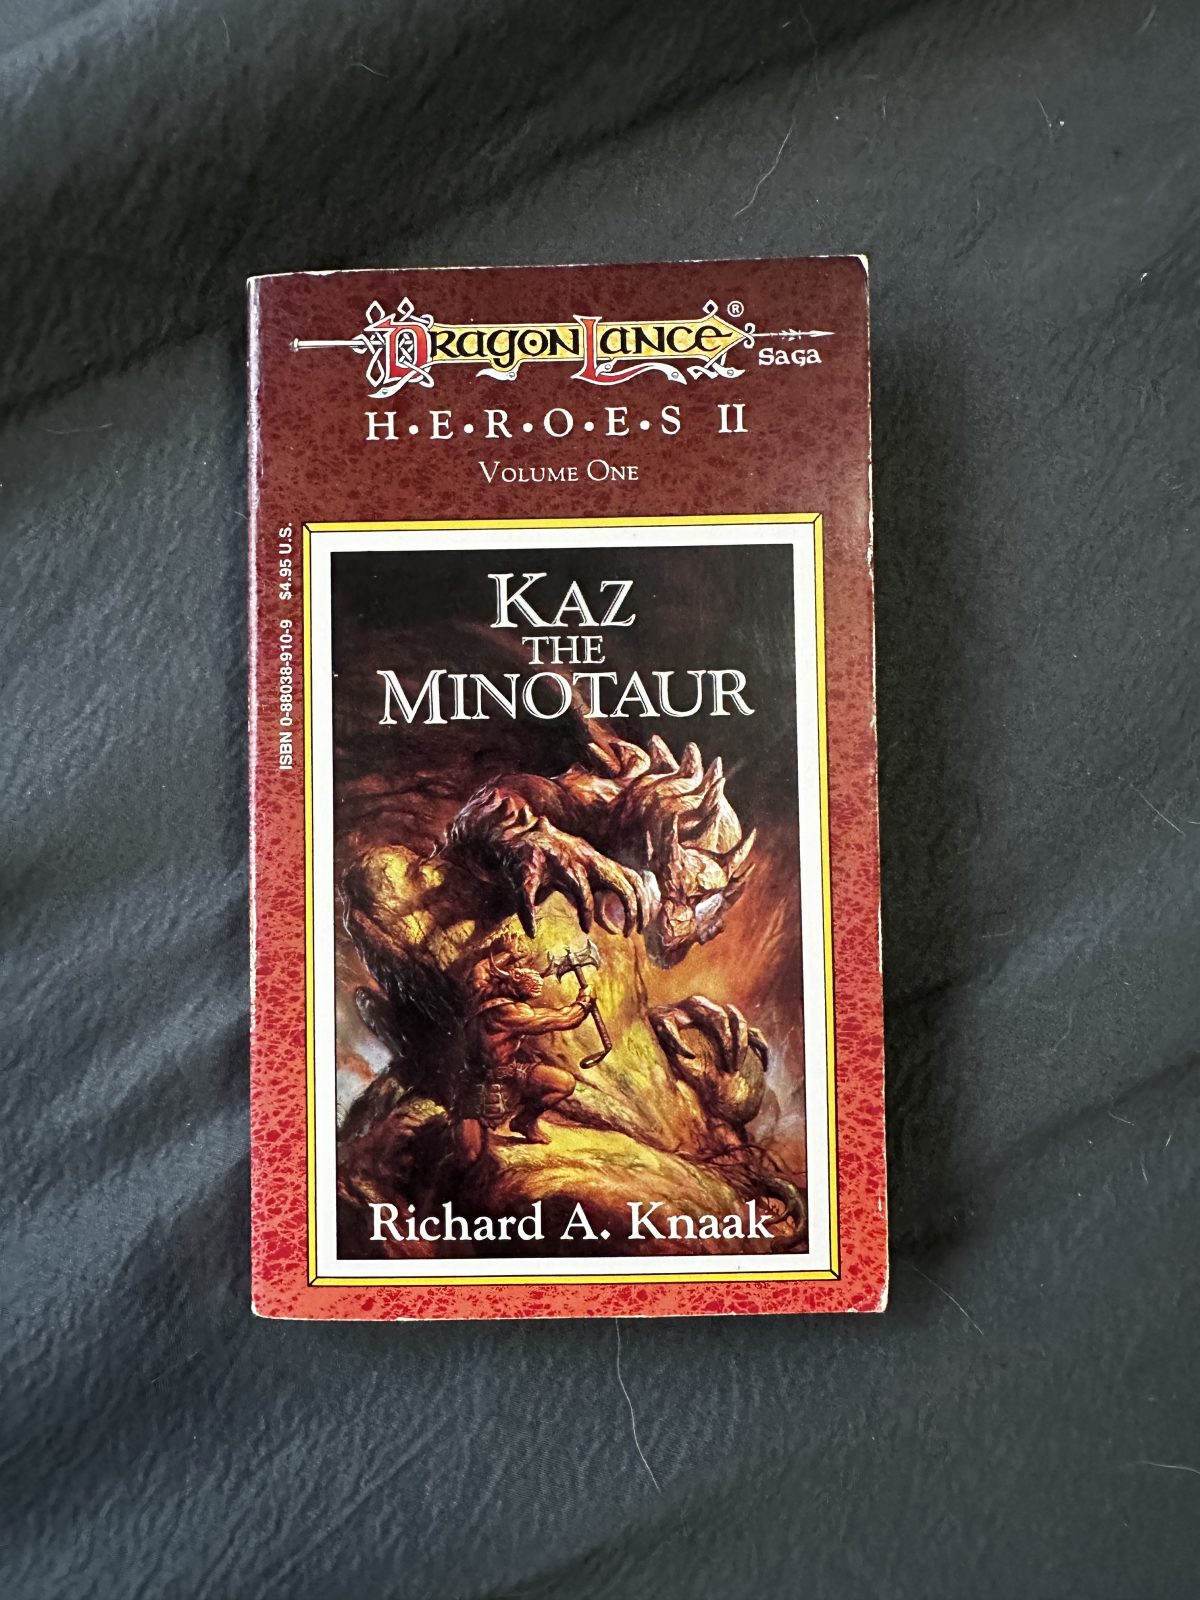 DragonLance Heroes – Kaz the Minotaur is it worth the read?